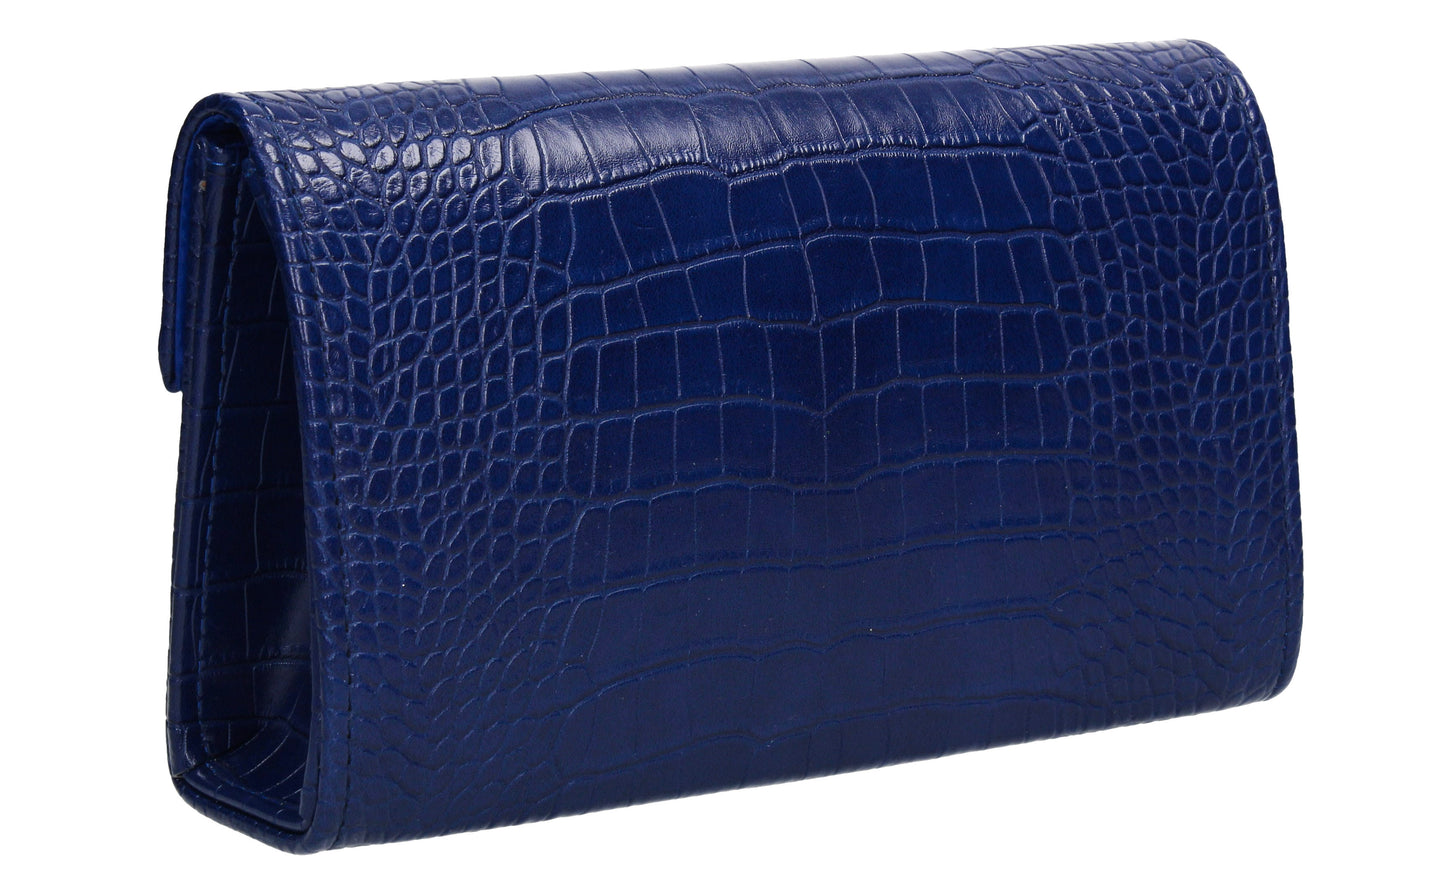 Emily Croc Effect Clutch Bag Navy Blue